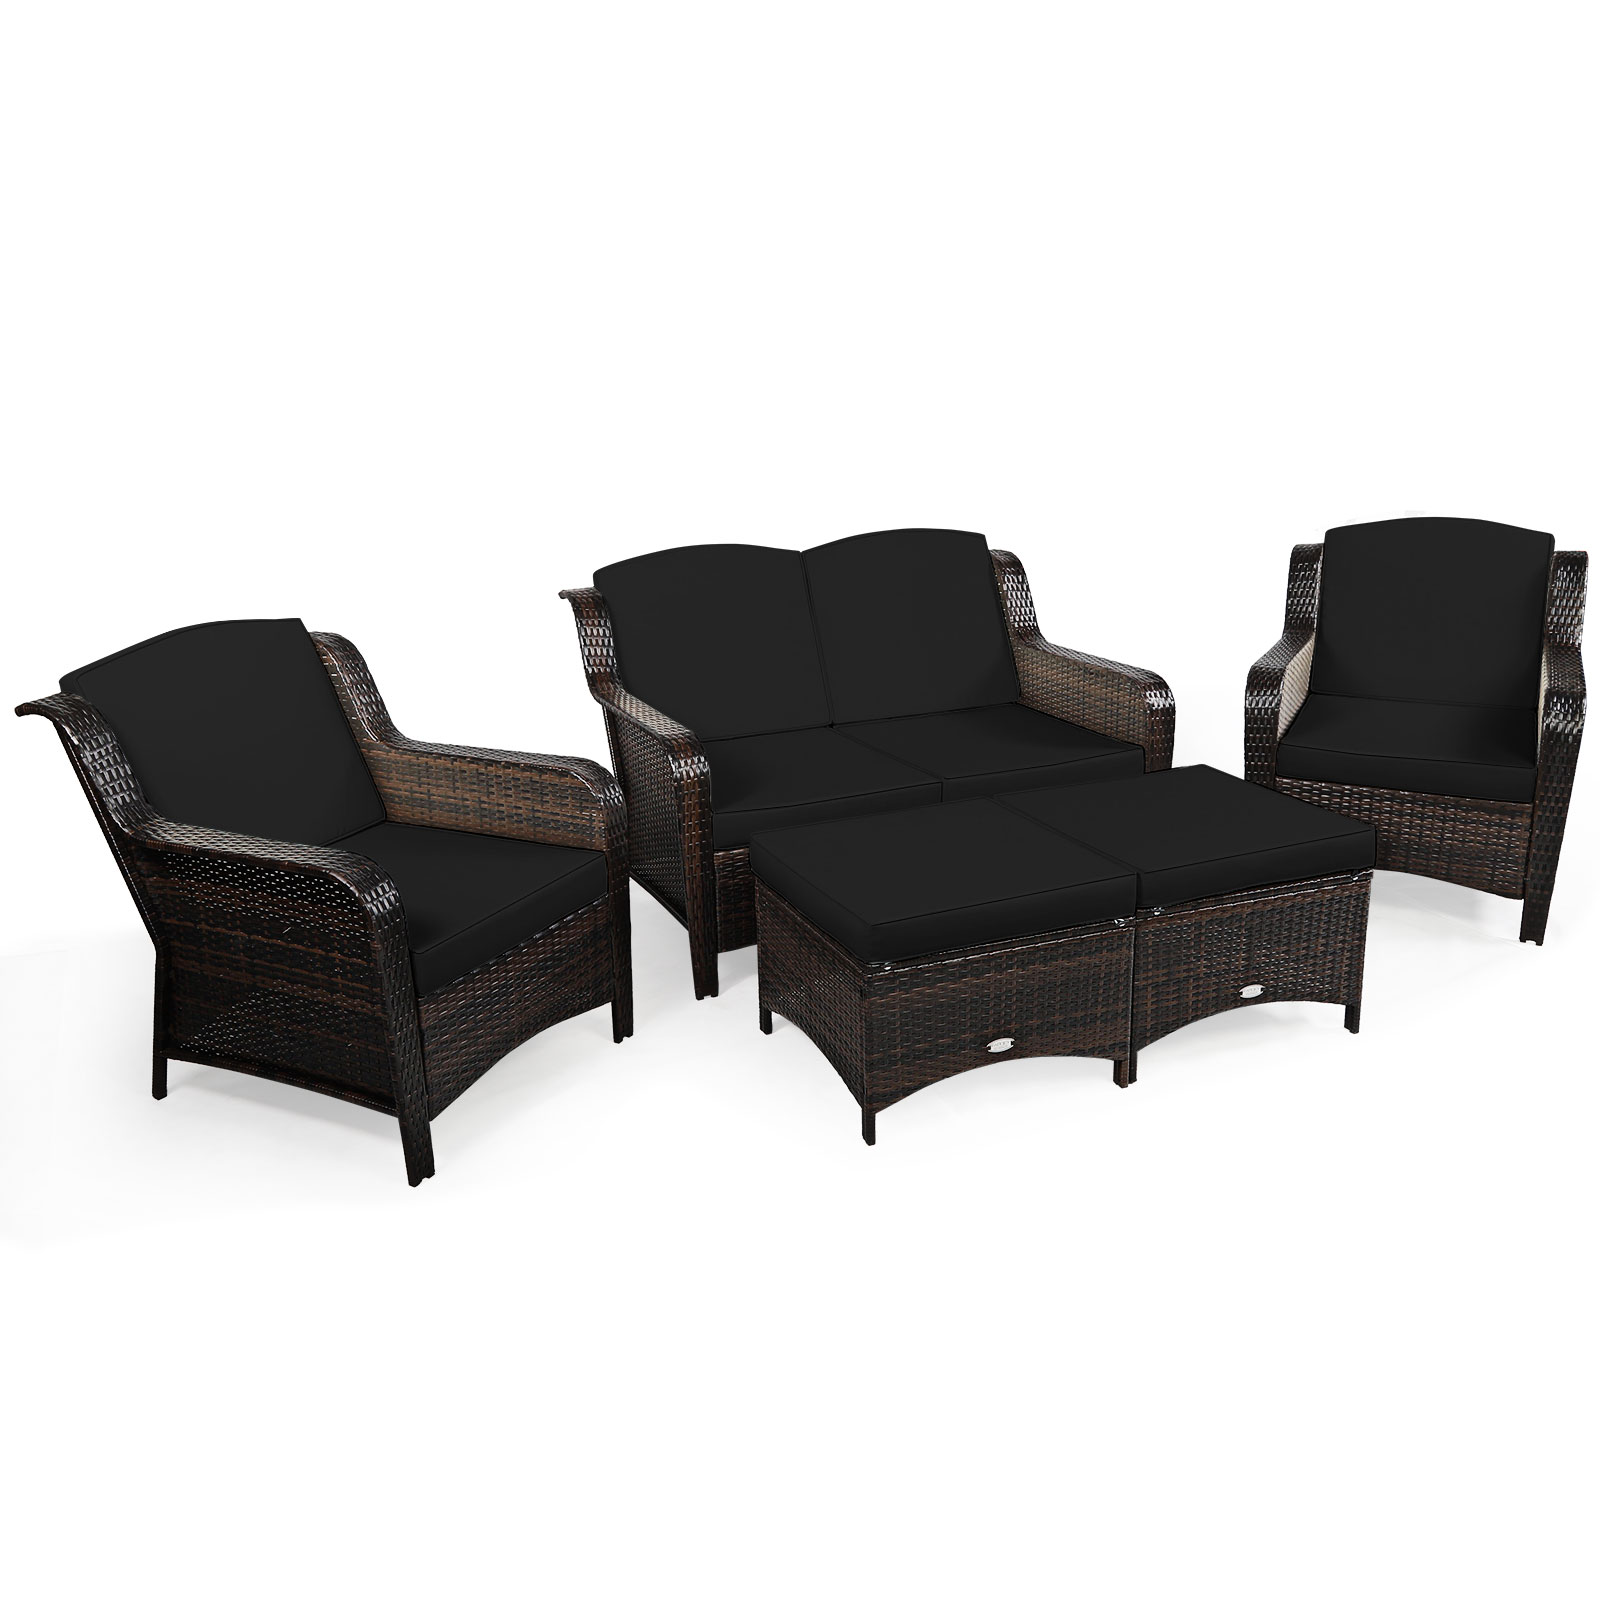 Black_5_Pieces_Patio_Outdoor_Rattan_Furniture_Set-8.jpg